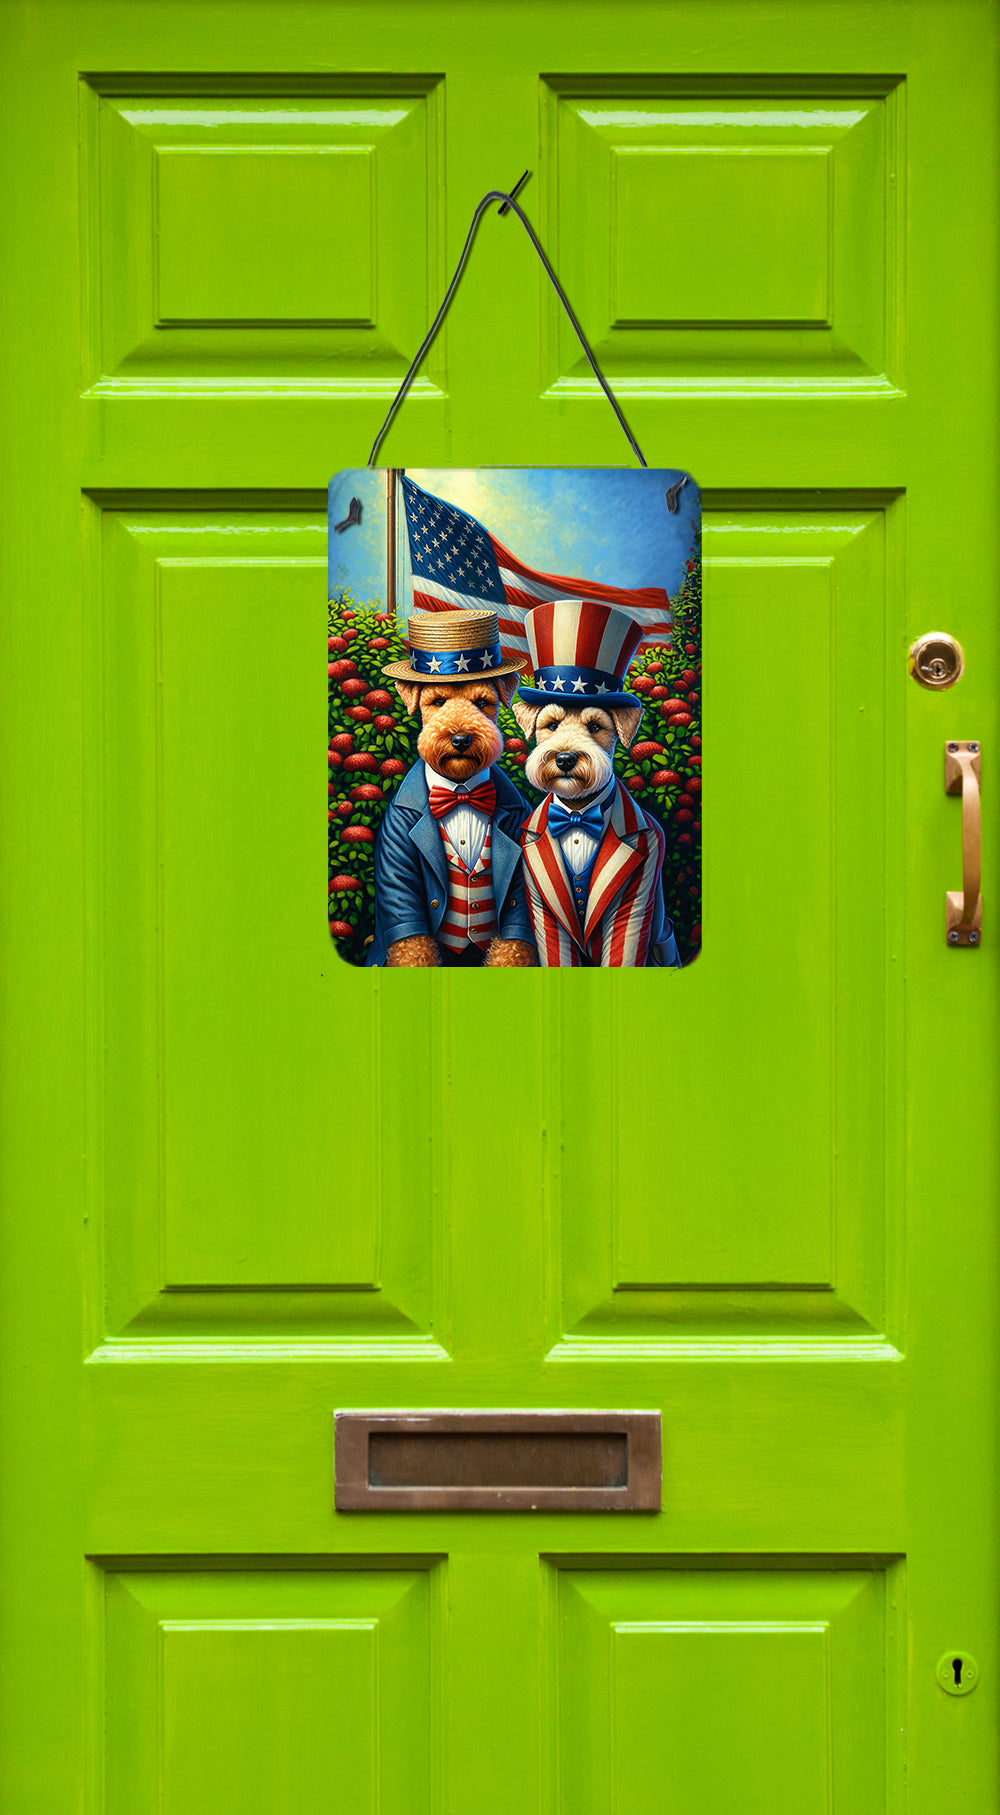 All American Lakeland Terrier Wall or Door Hanging Prints